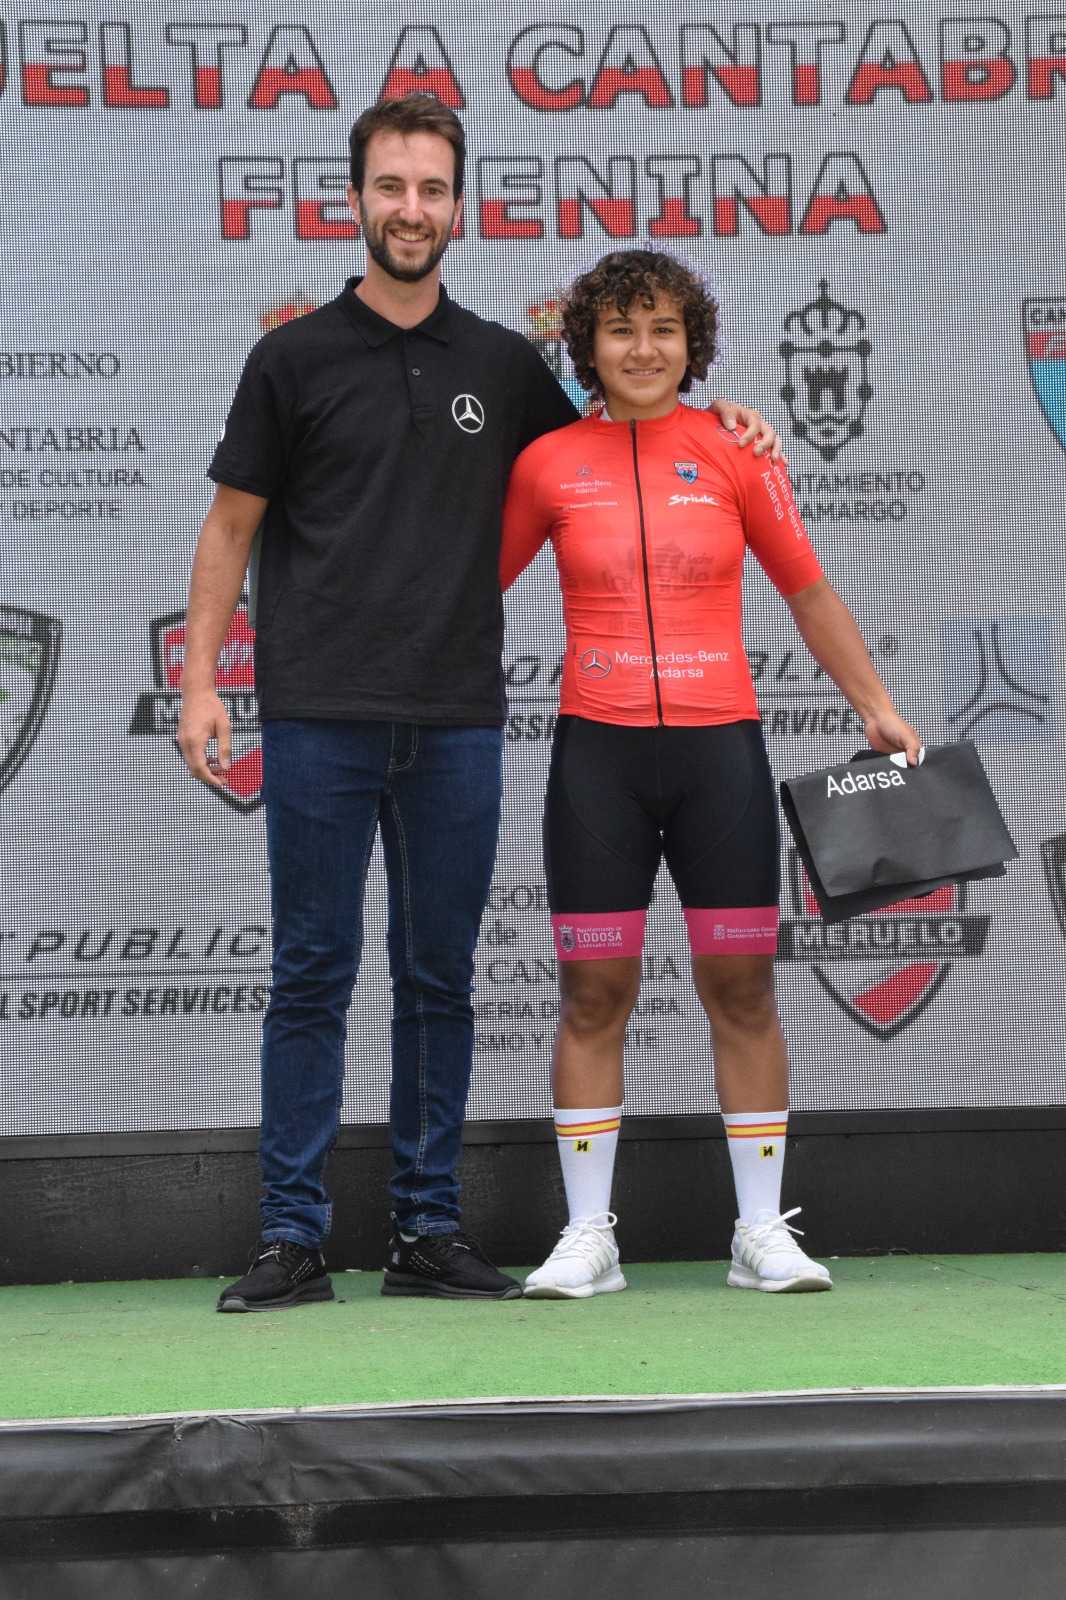 Magdalena Deya y Paula Ostiz ganan la Vuelta a Cantabria Femenina